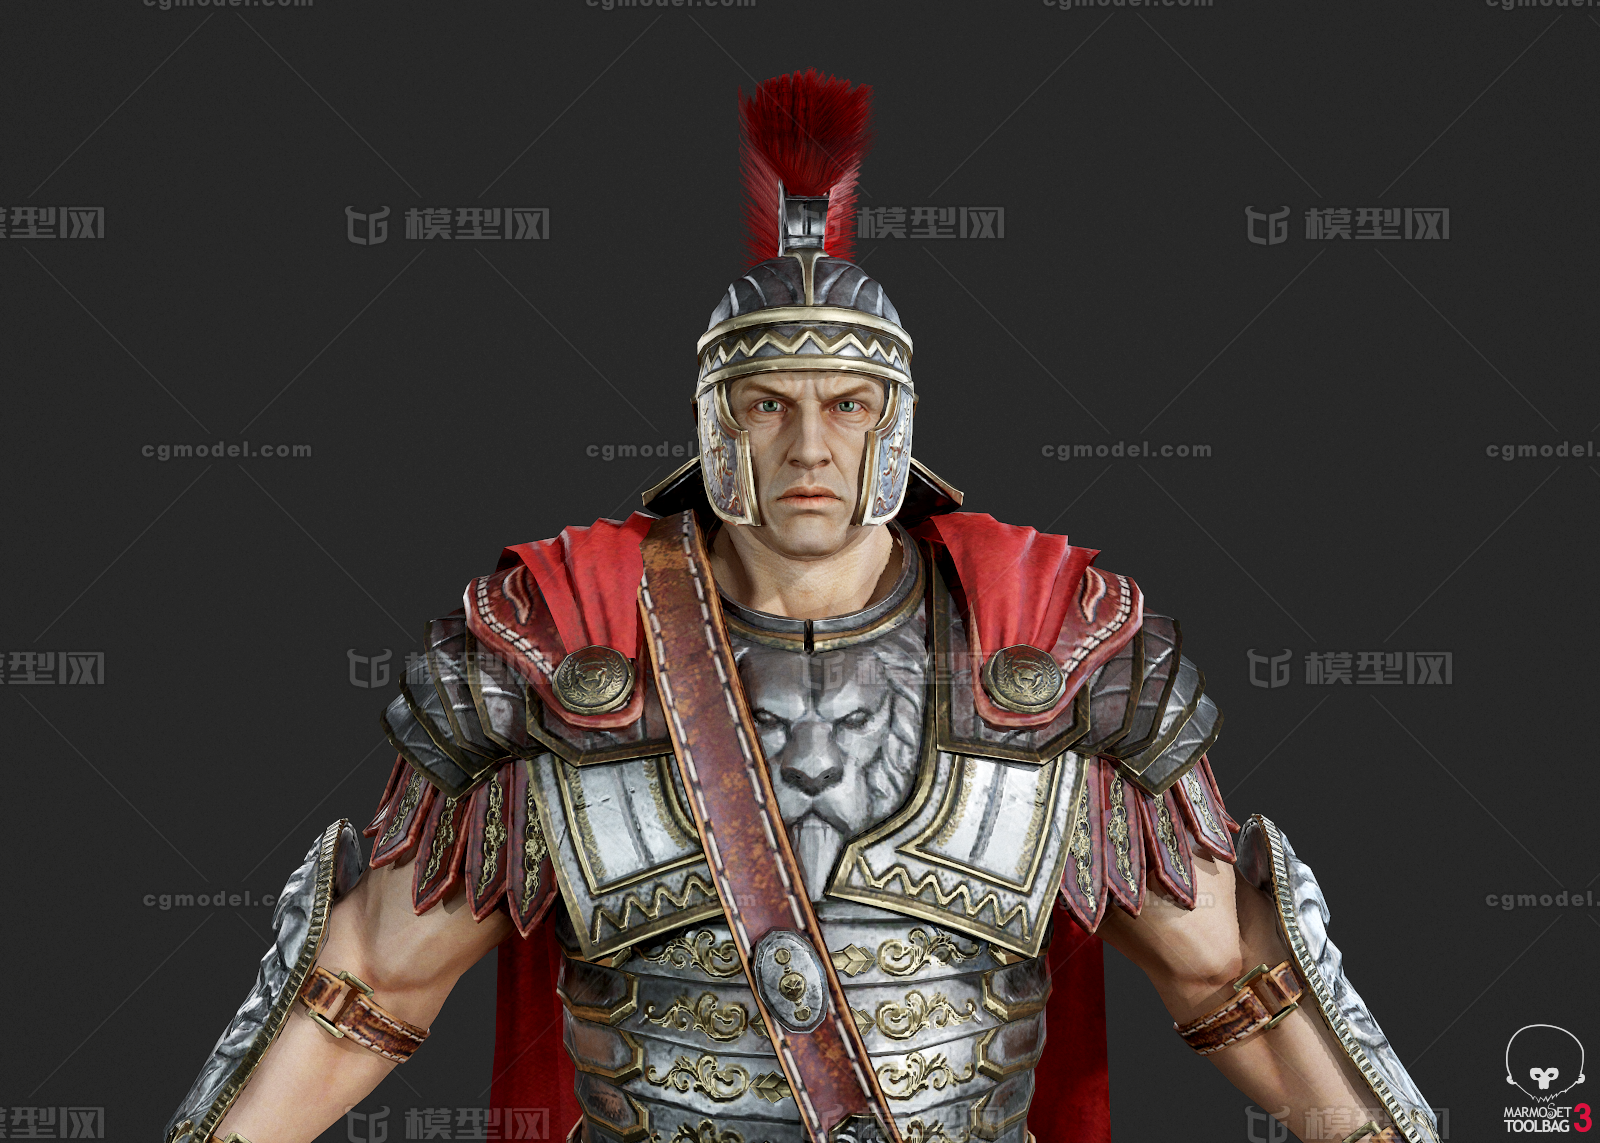 pbr 凯撒大帝 罗马皇帝 古代罗马将军 士兵 战士 罗马风格盔甲 铠甲